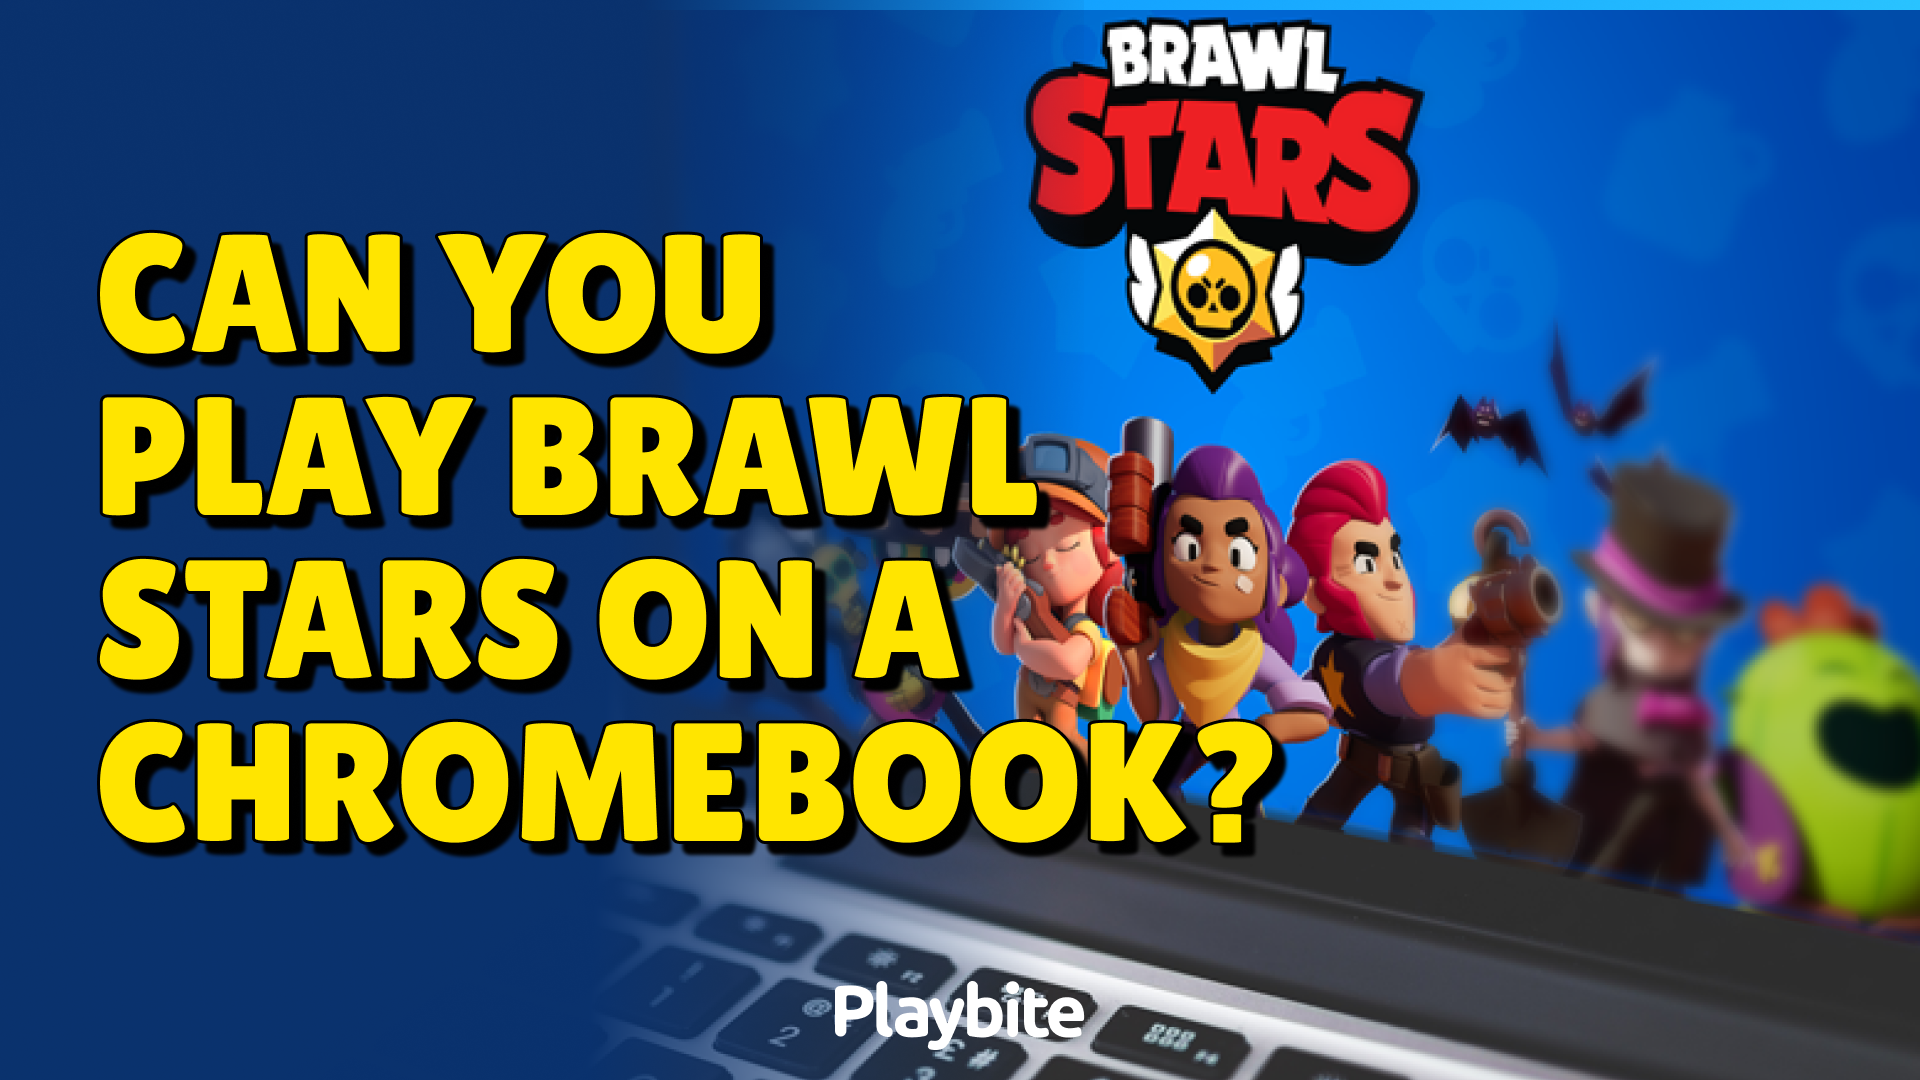 Can You Play Brawl Stars on a Chromebook?